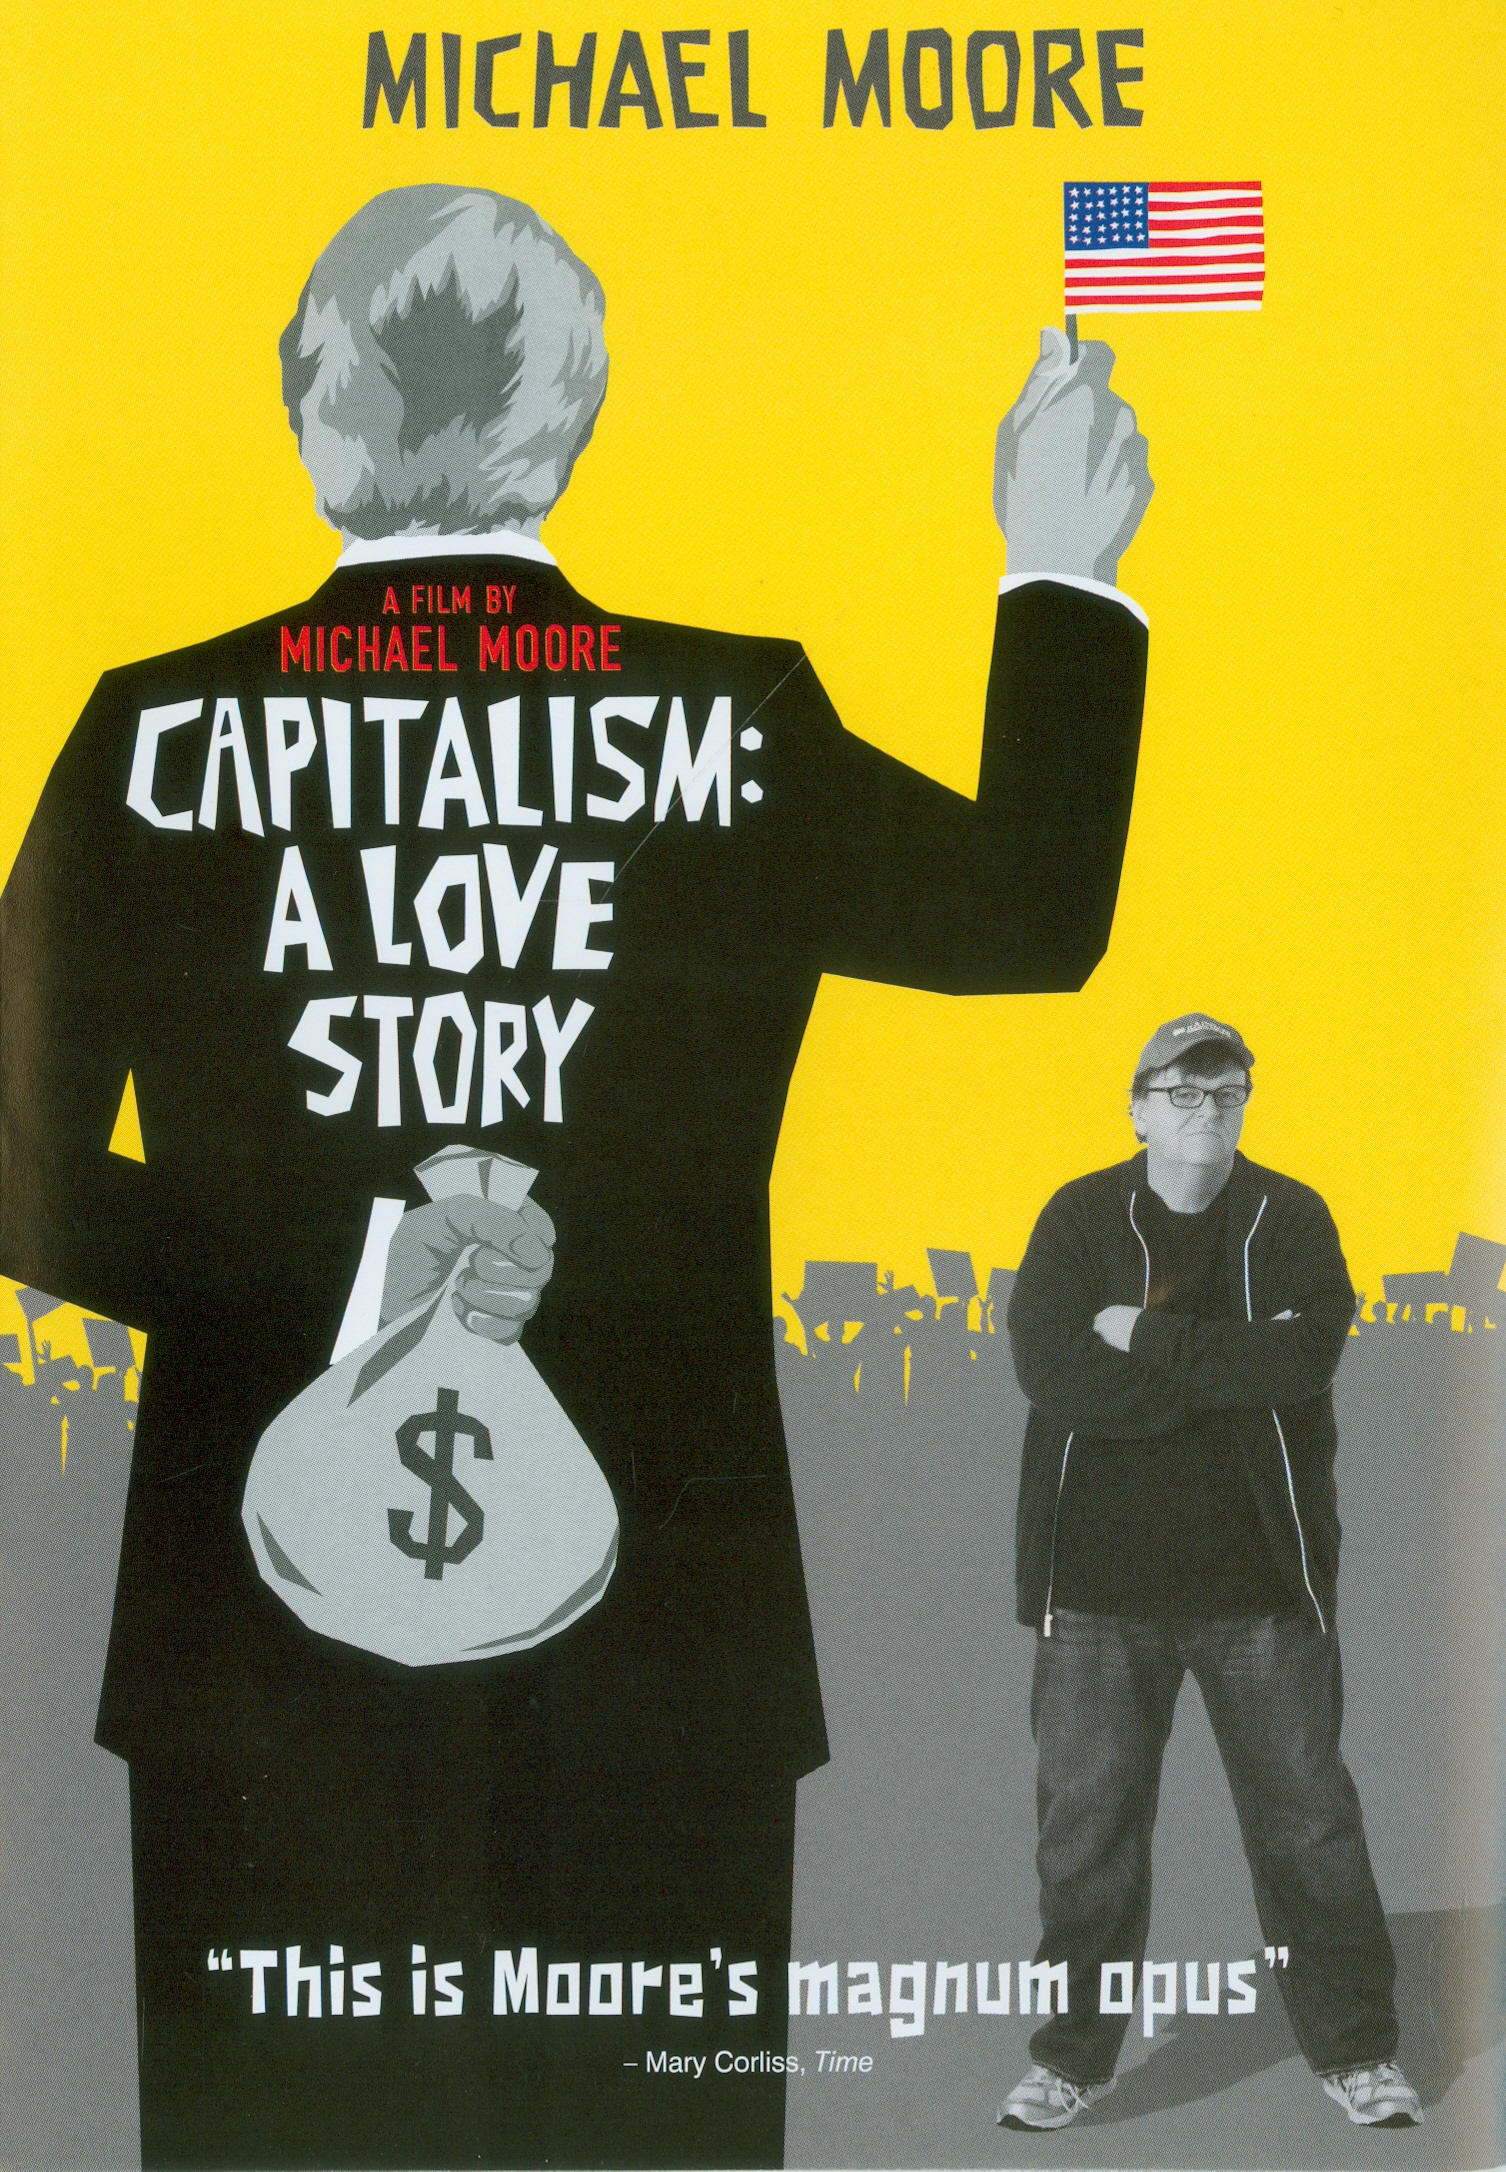  Capitalism: a love story